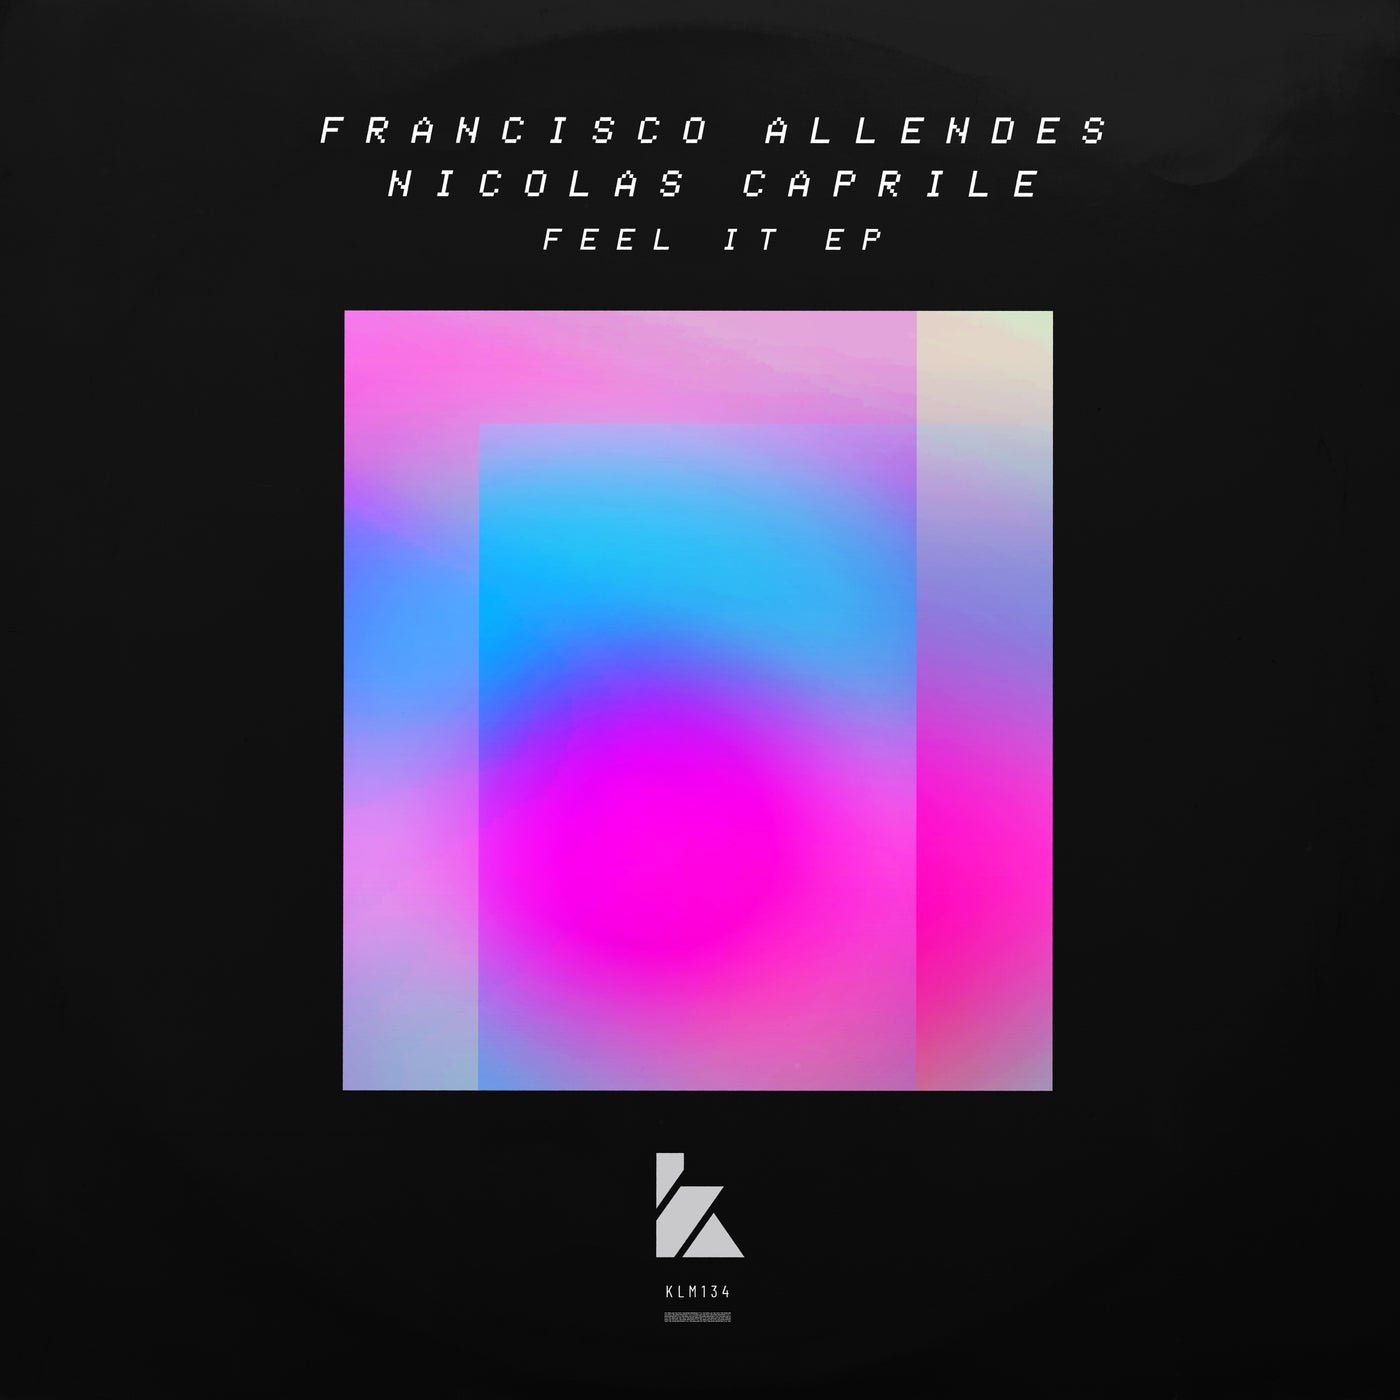 Francisco Allendes, Nicolas Caprile – Feel It EP [KLM13401Z]